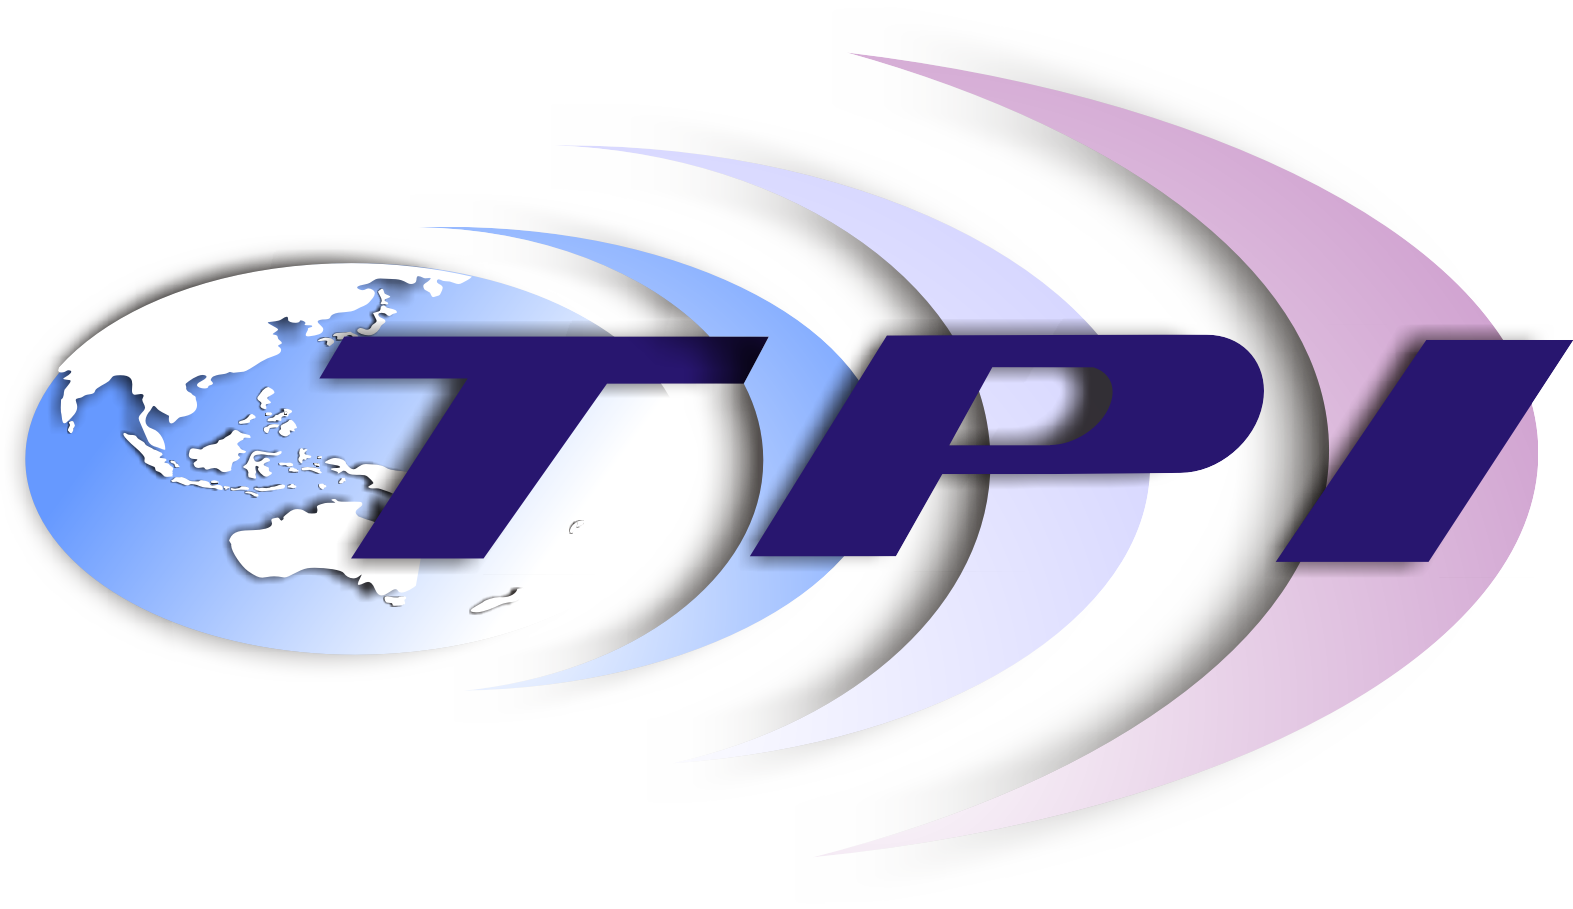 Wikipedia Logo 2001